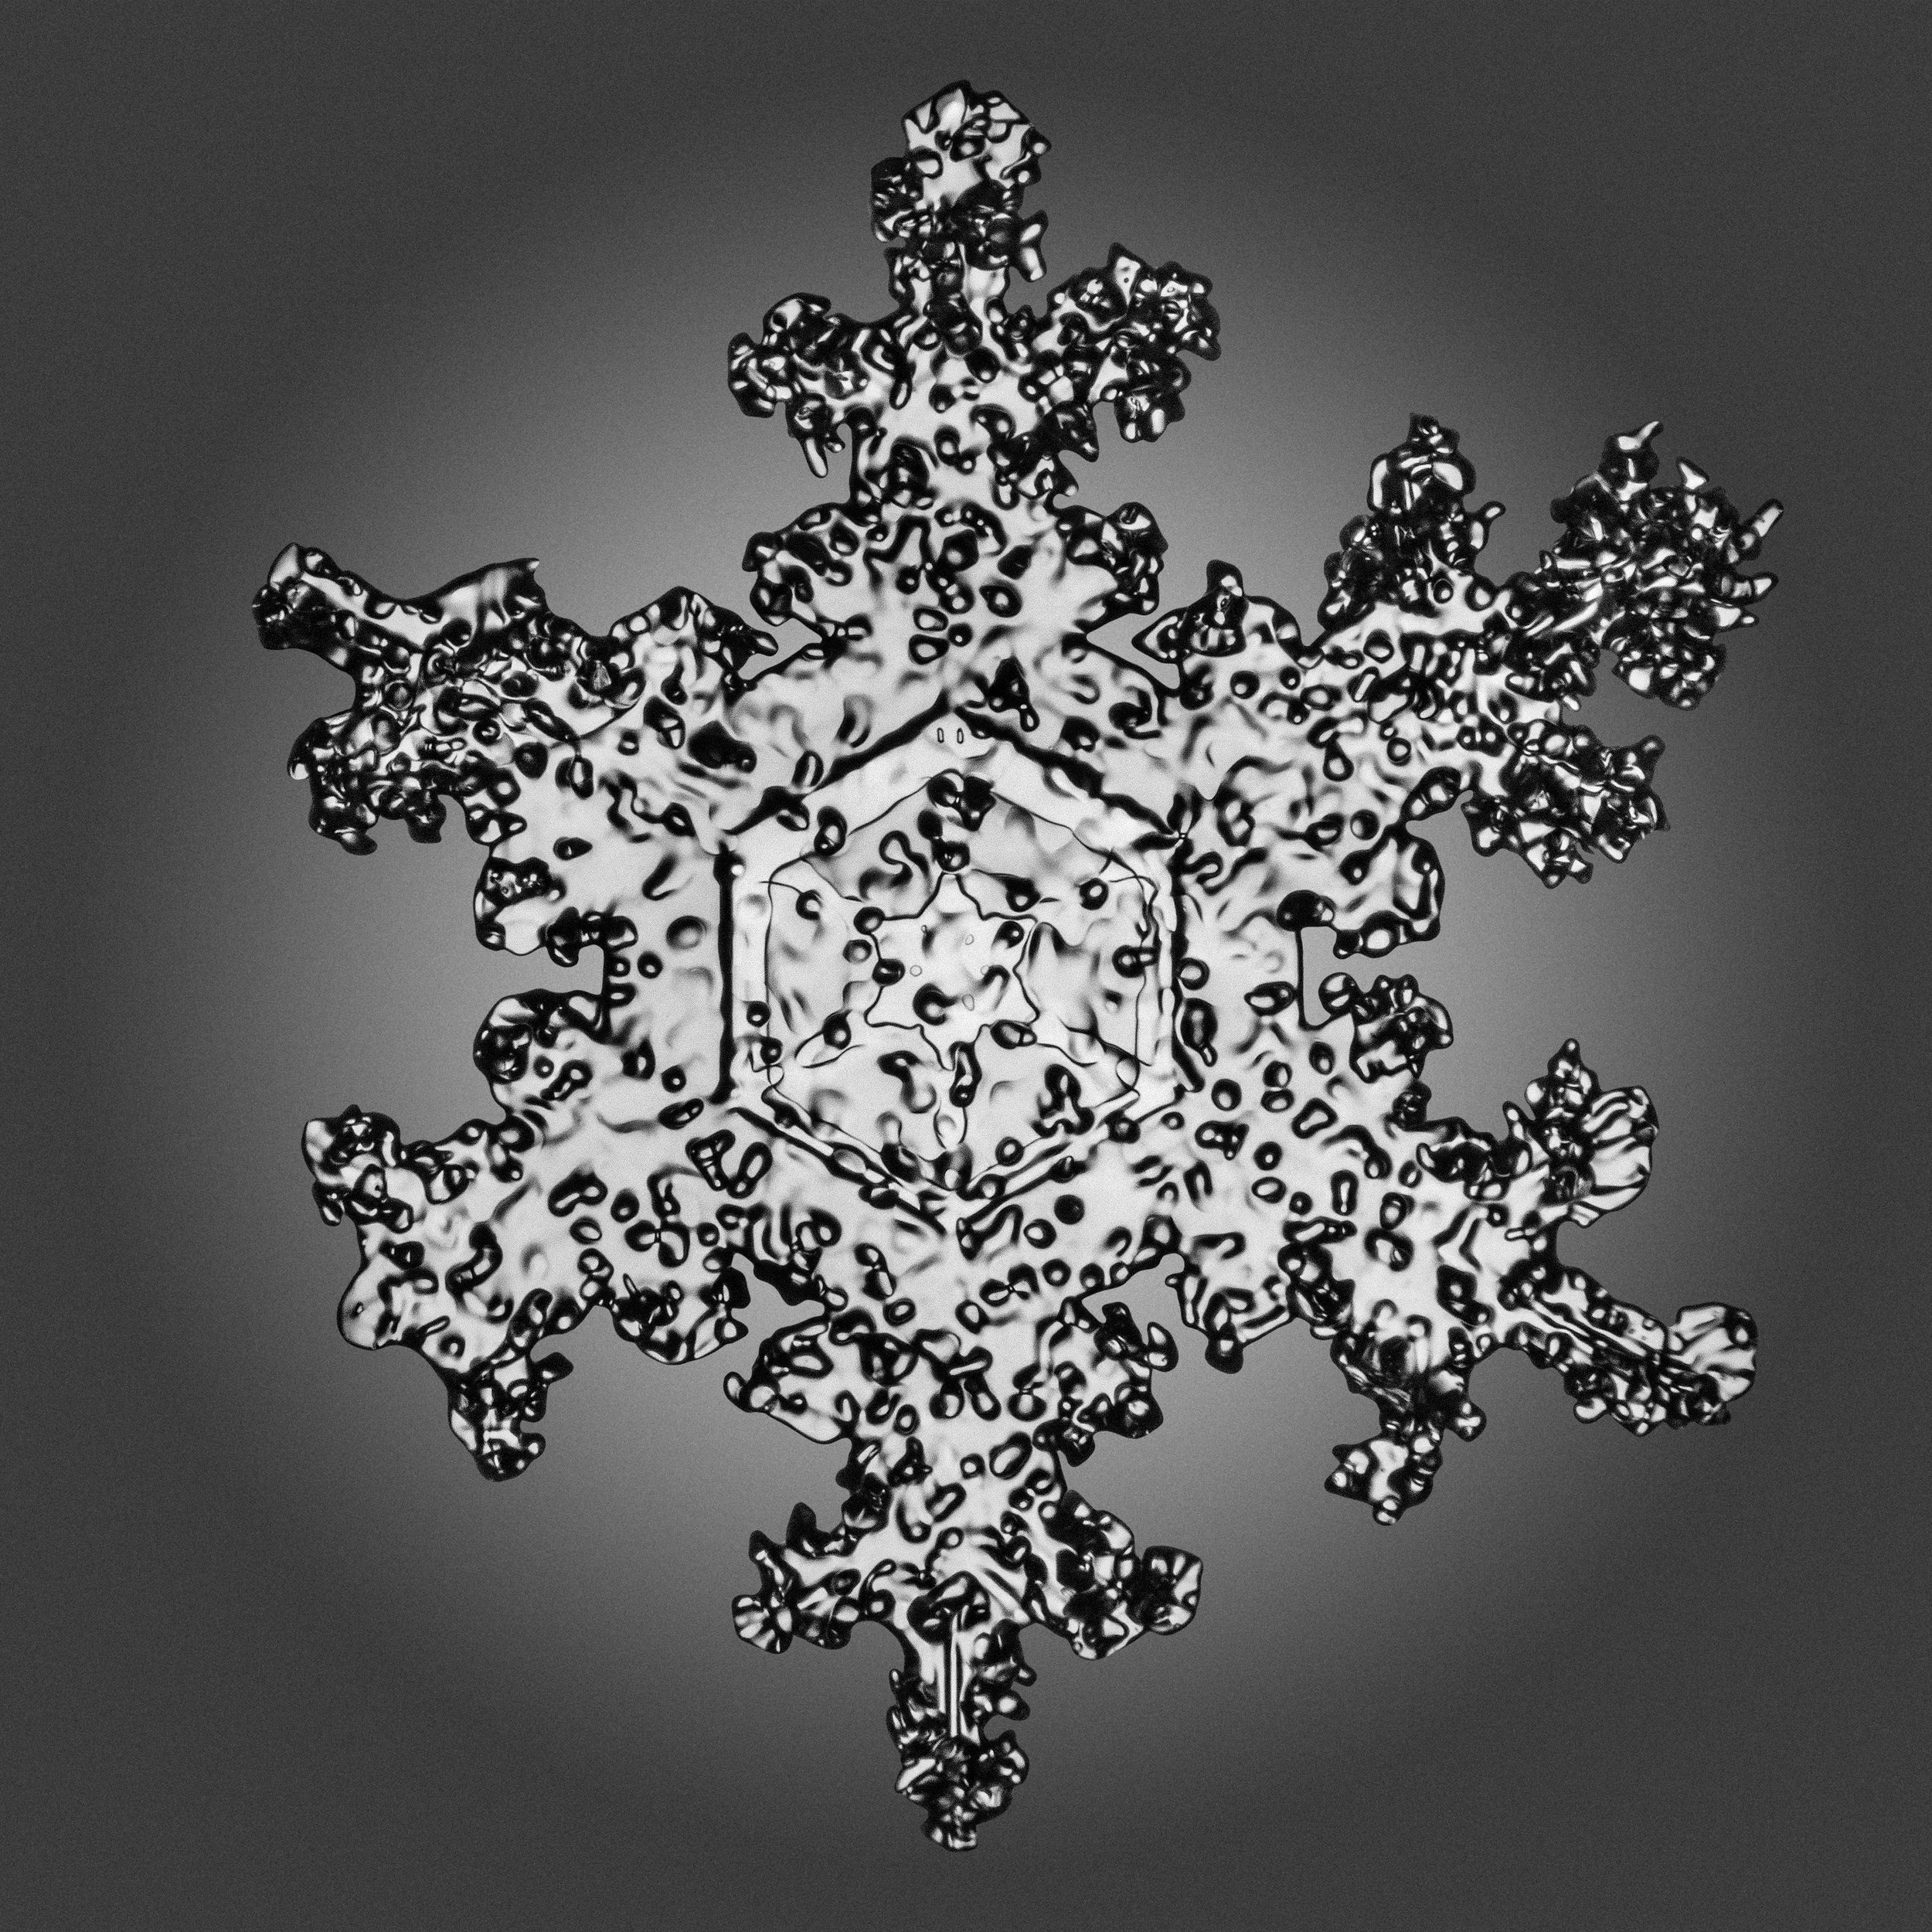 09_Snowflakes_40x40.jpg